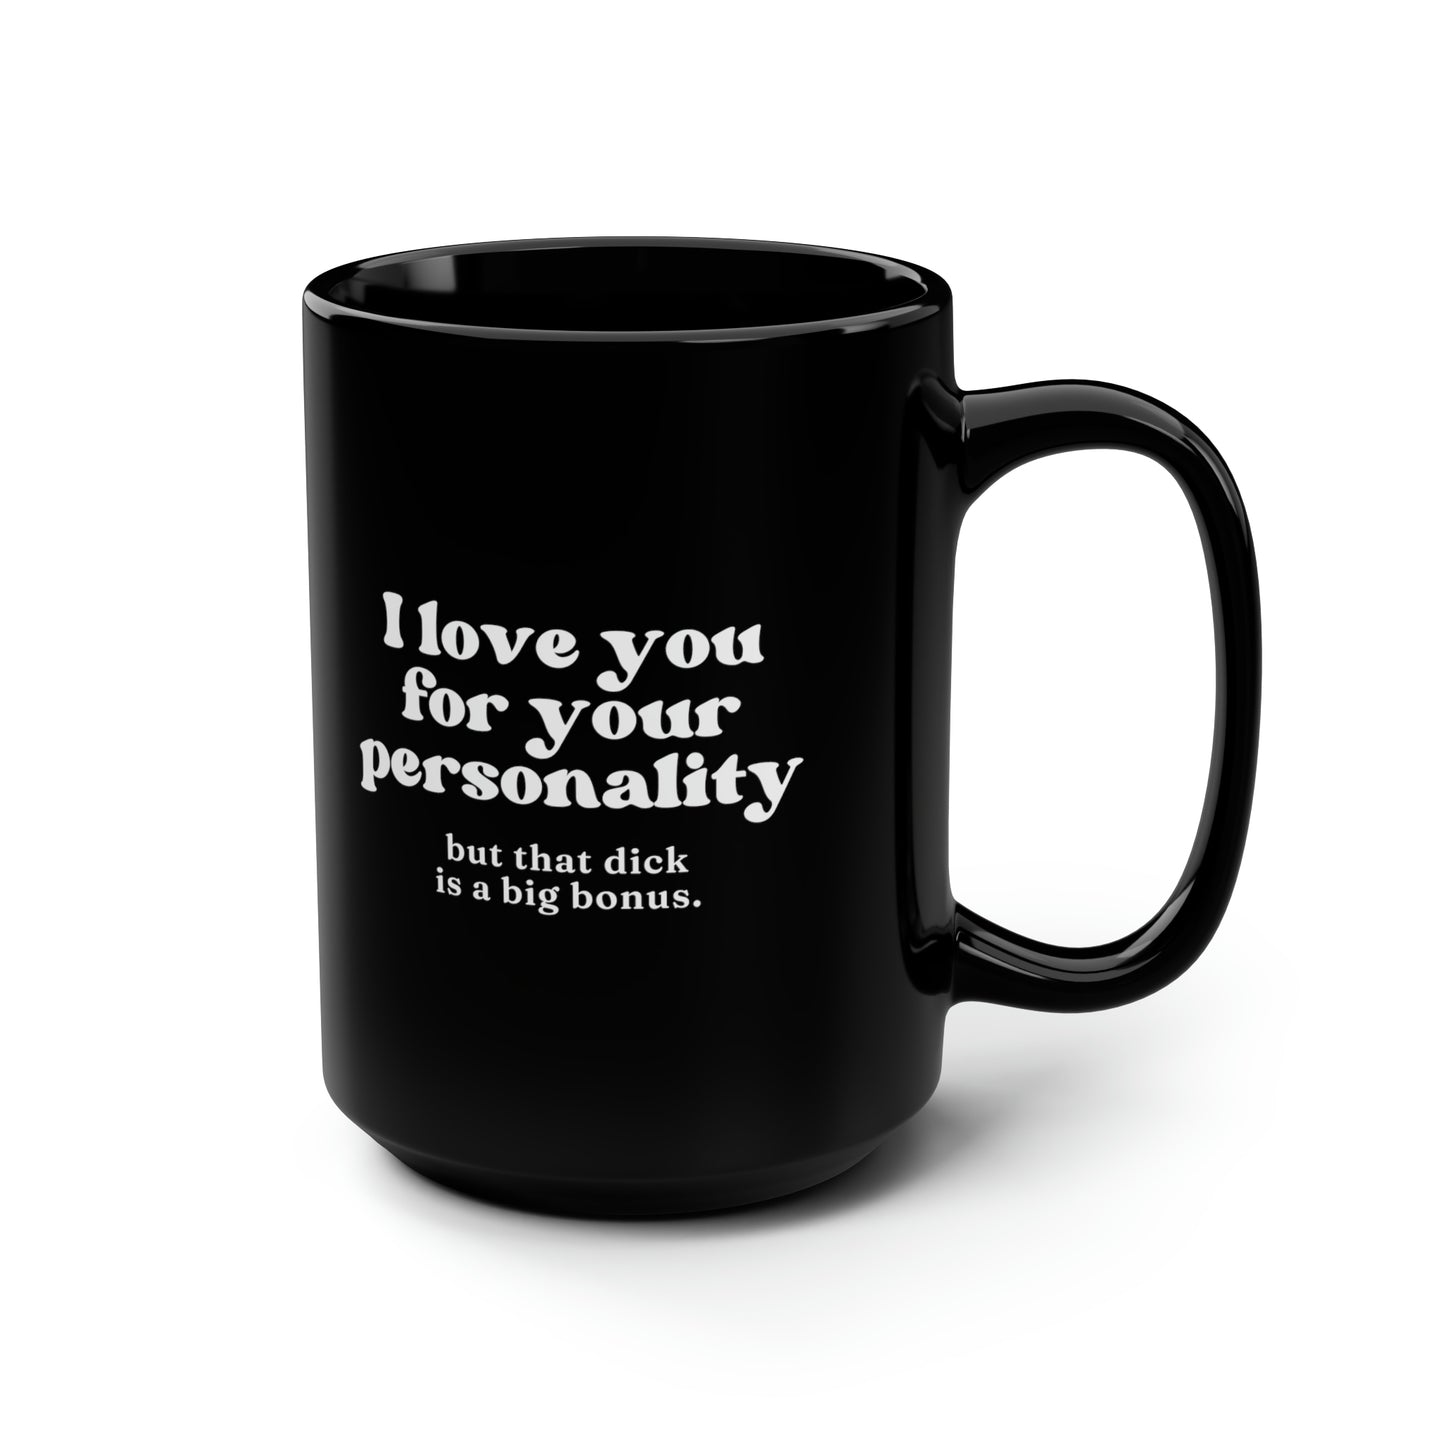 i love you for your personality 15oz black funny coffee mug tea cup gift for him boyfriend husband valentines anniversary joke wedding gag gift waveywares wavey wares